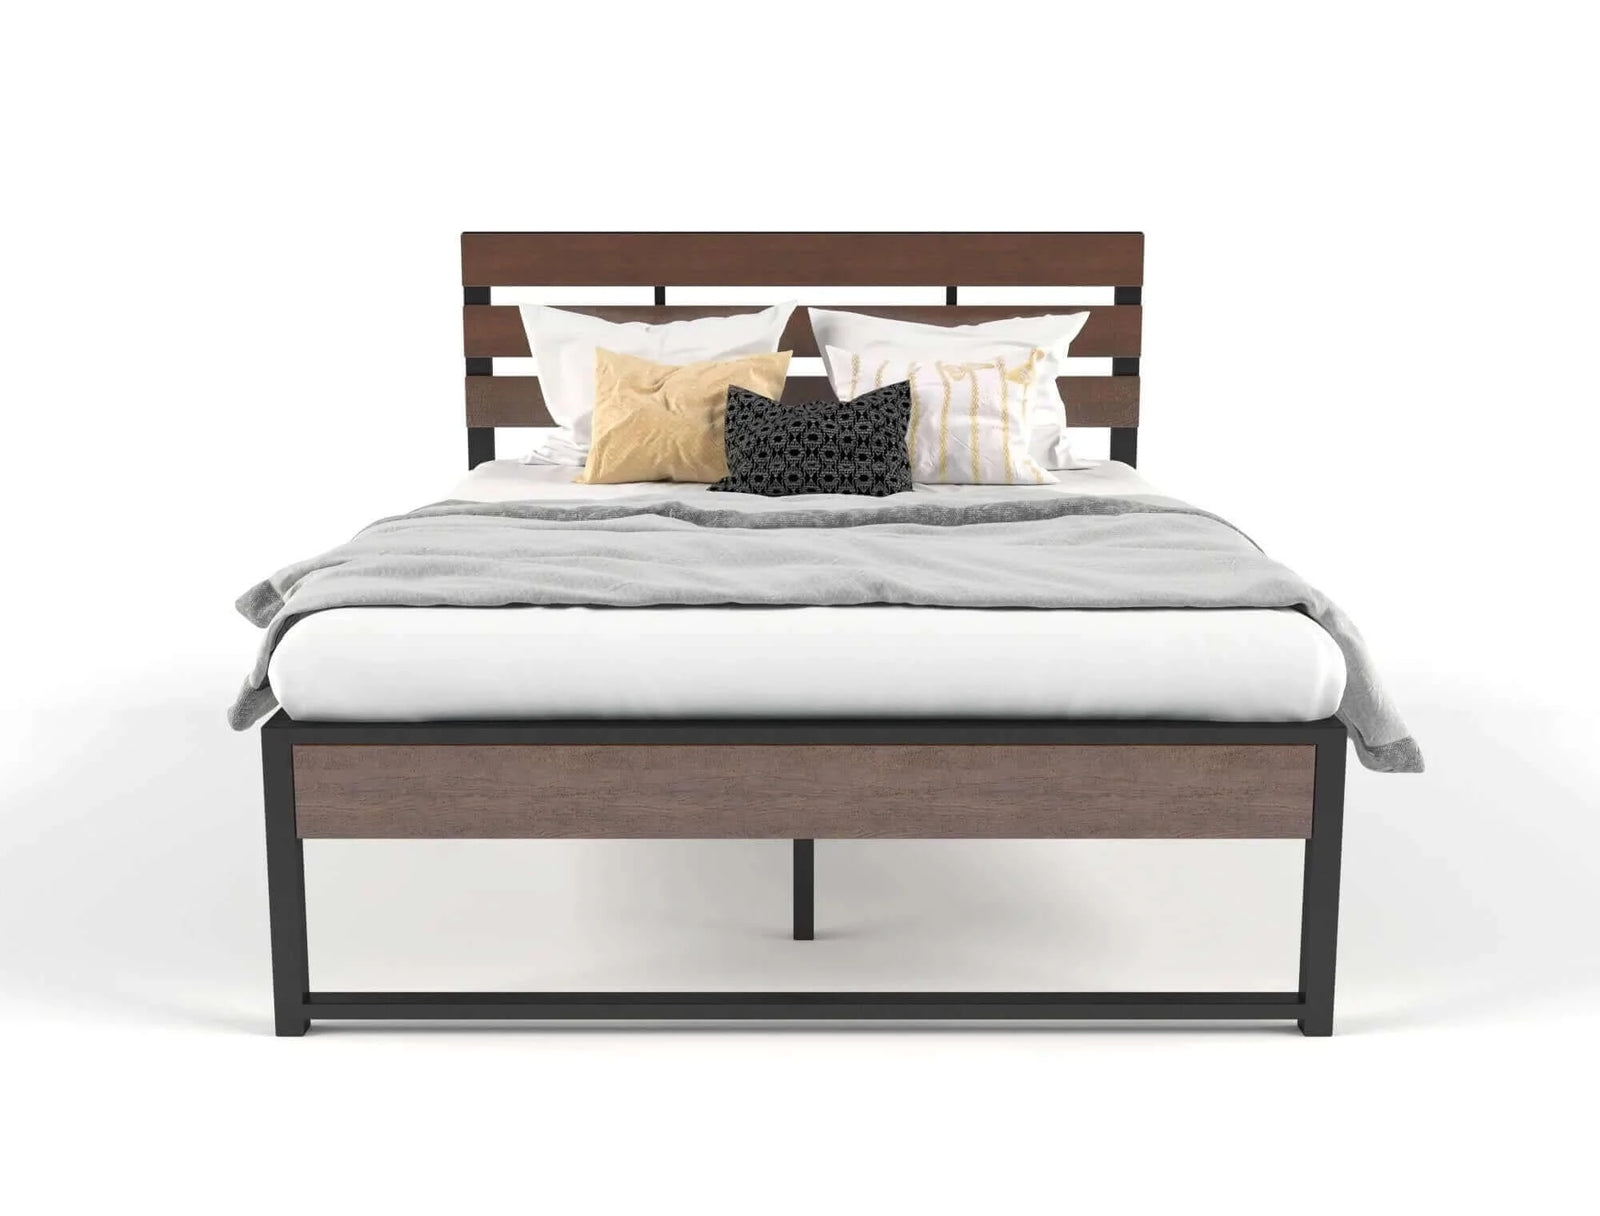 Buy ora wooden and metal bed frame king - upinteriors-Upinteriors